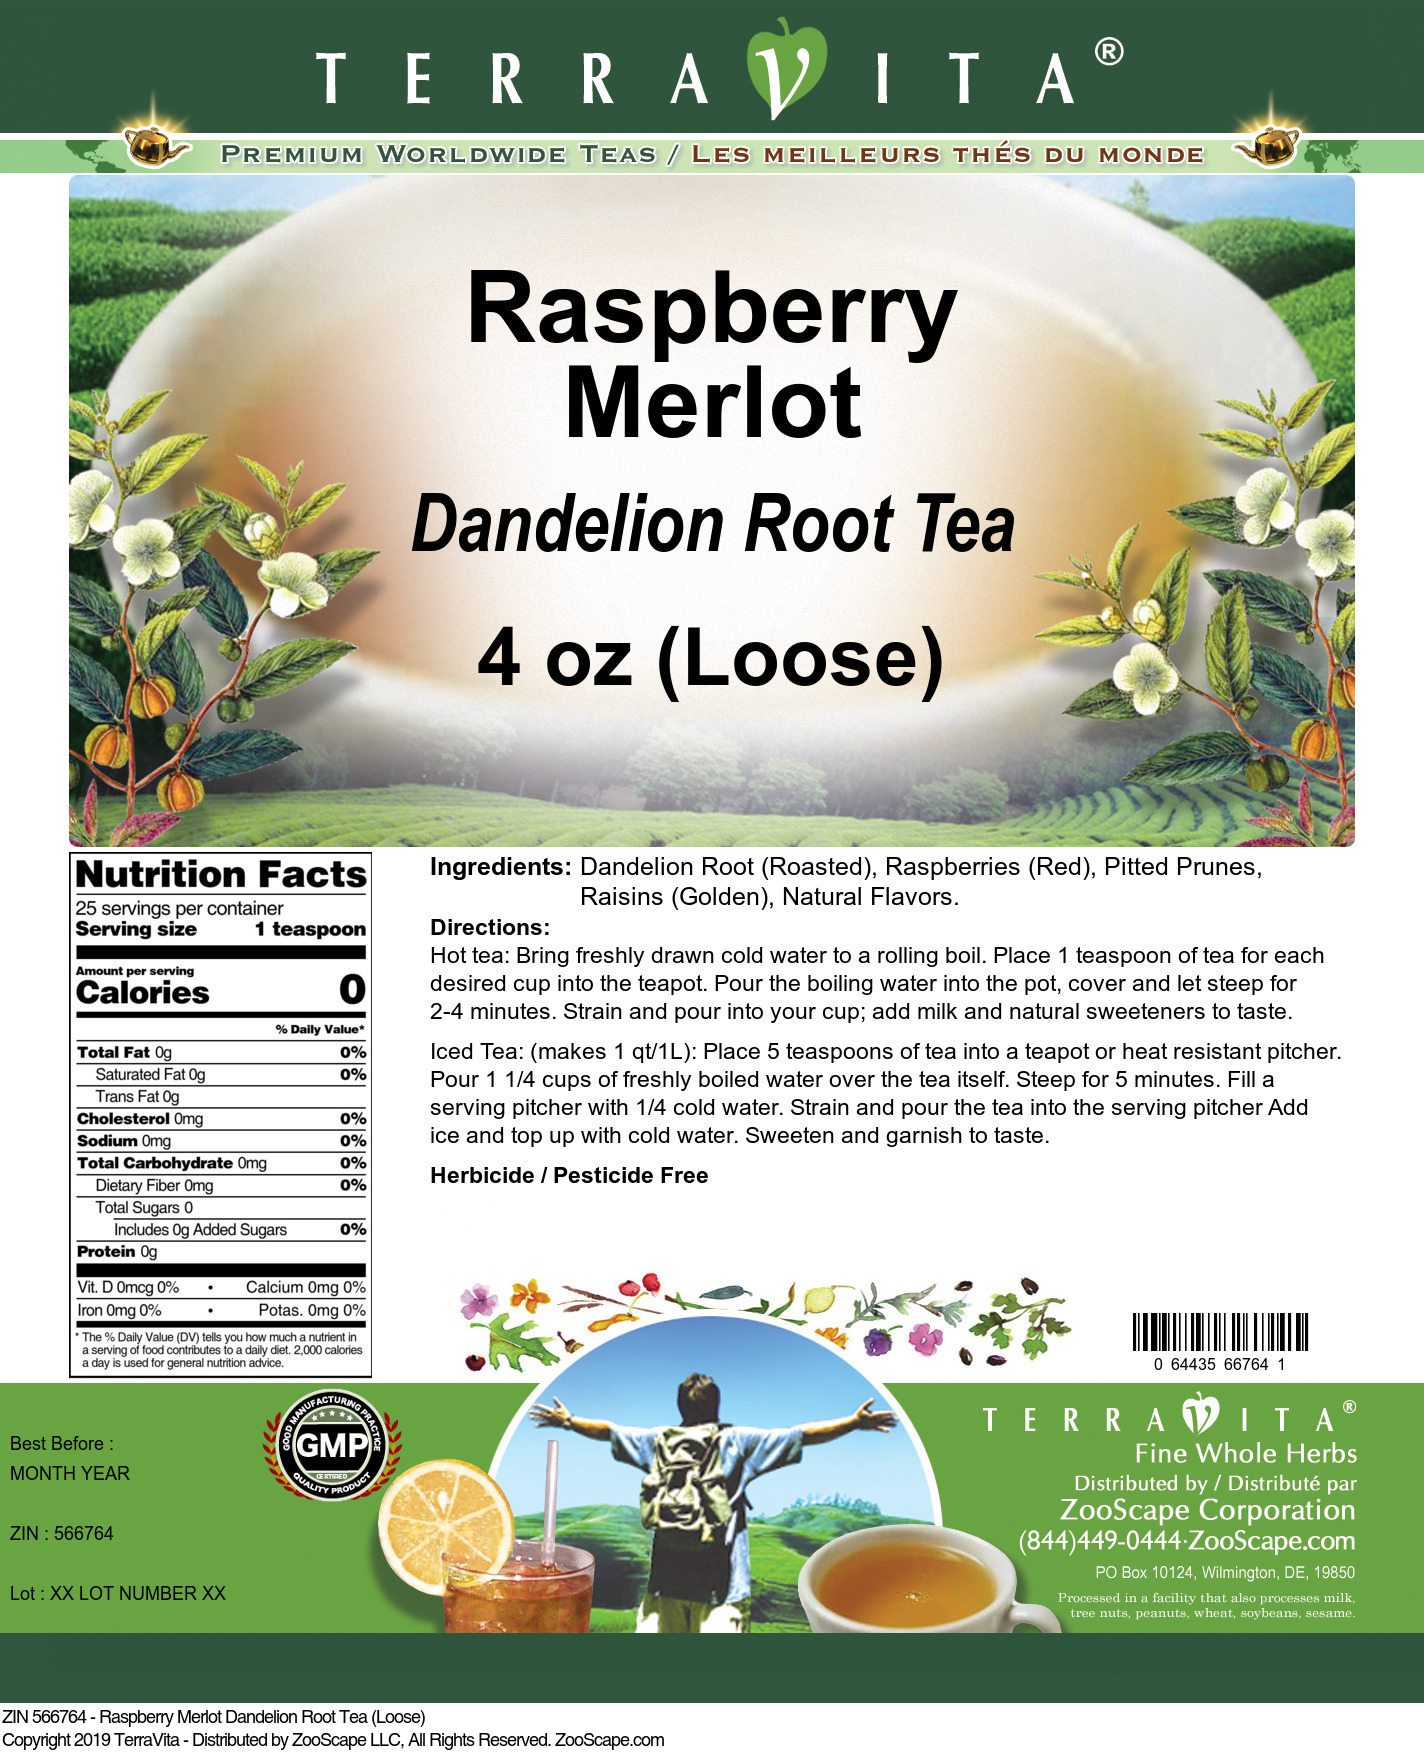 Raspberry Merlot Dandelion Root Tea (Loose) - Label